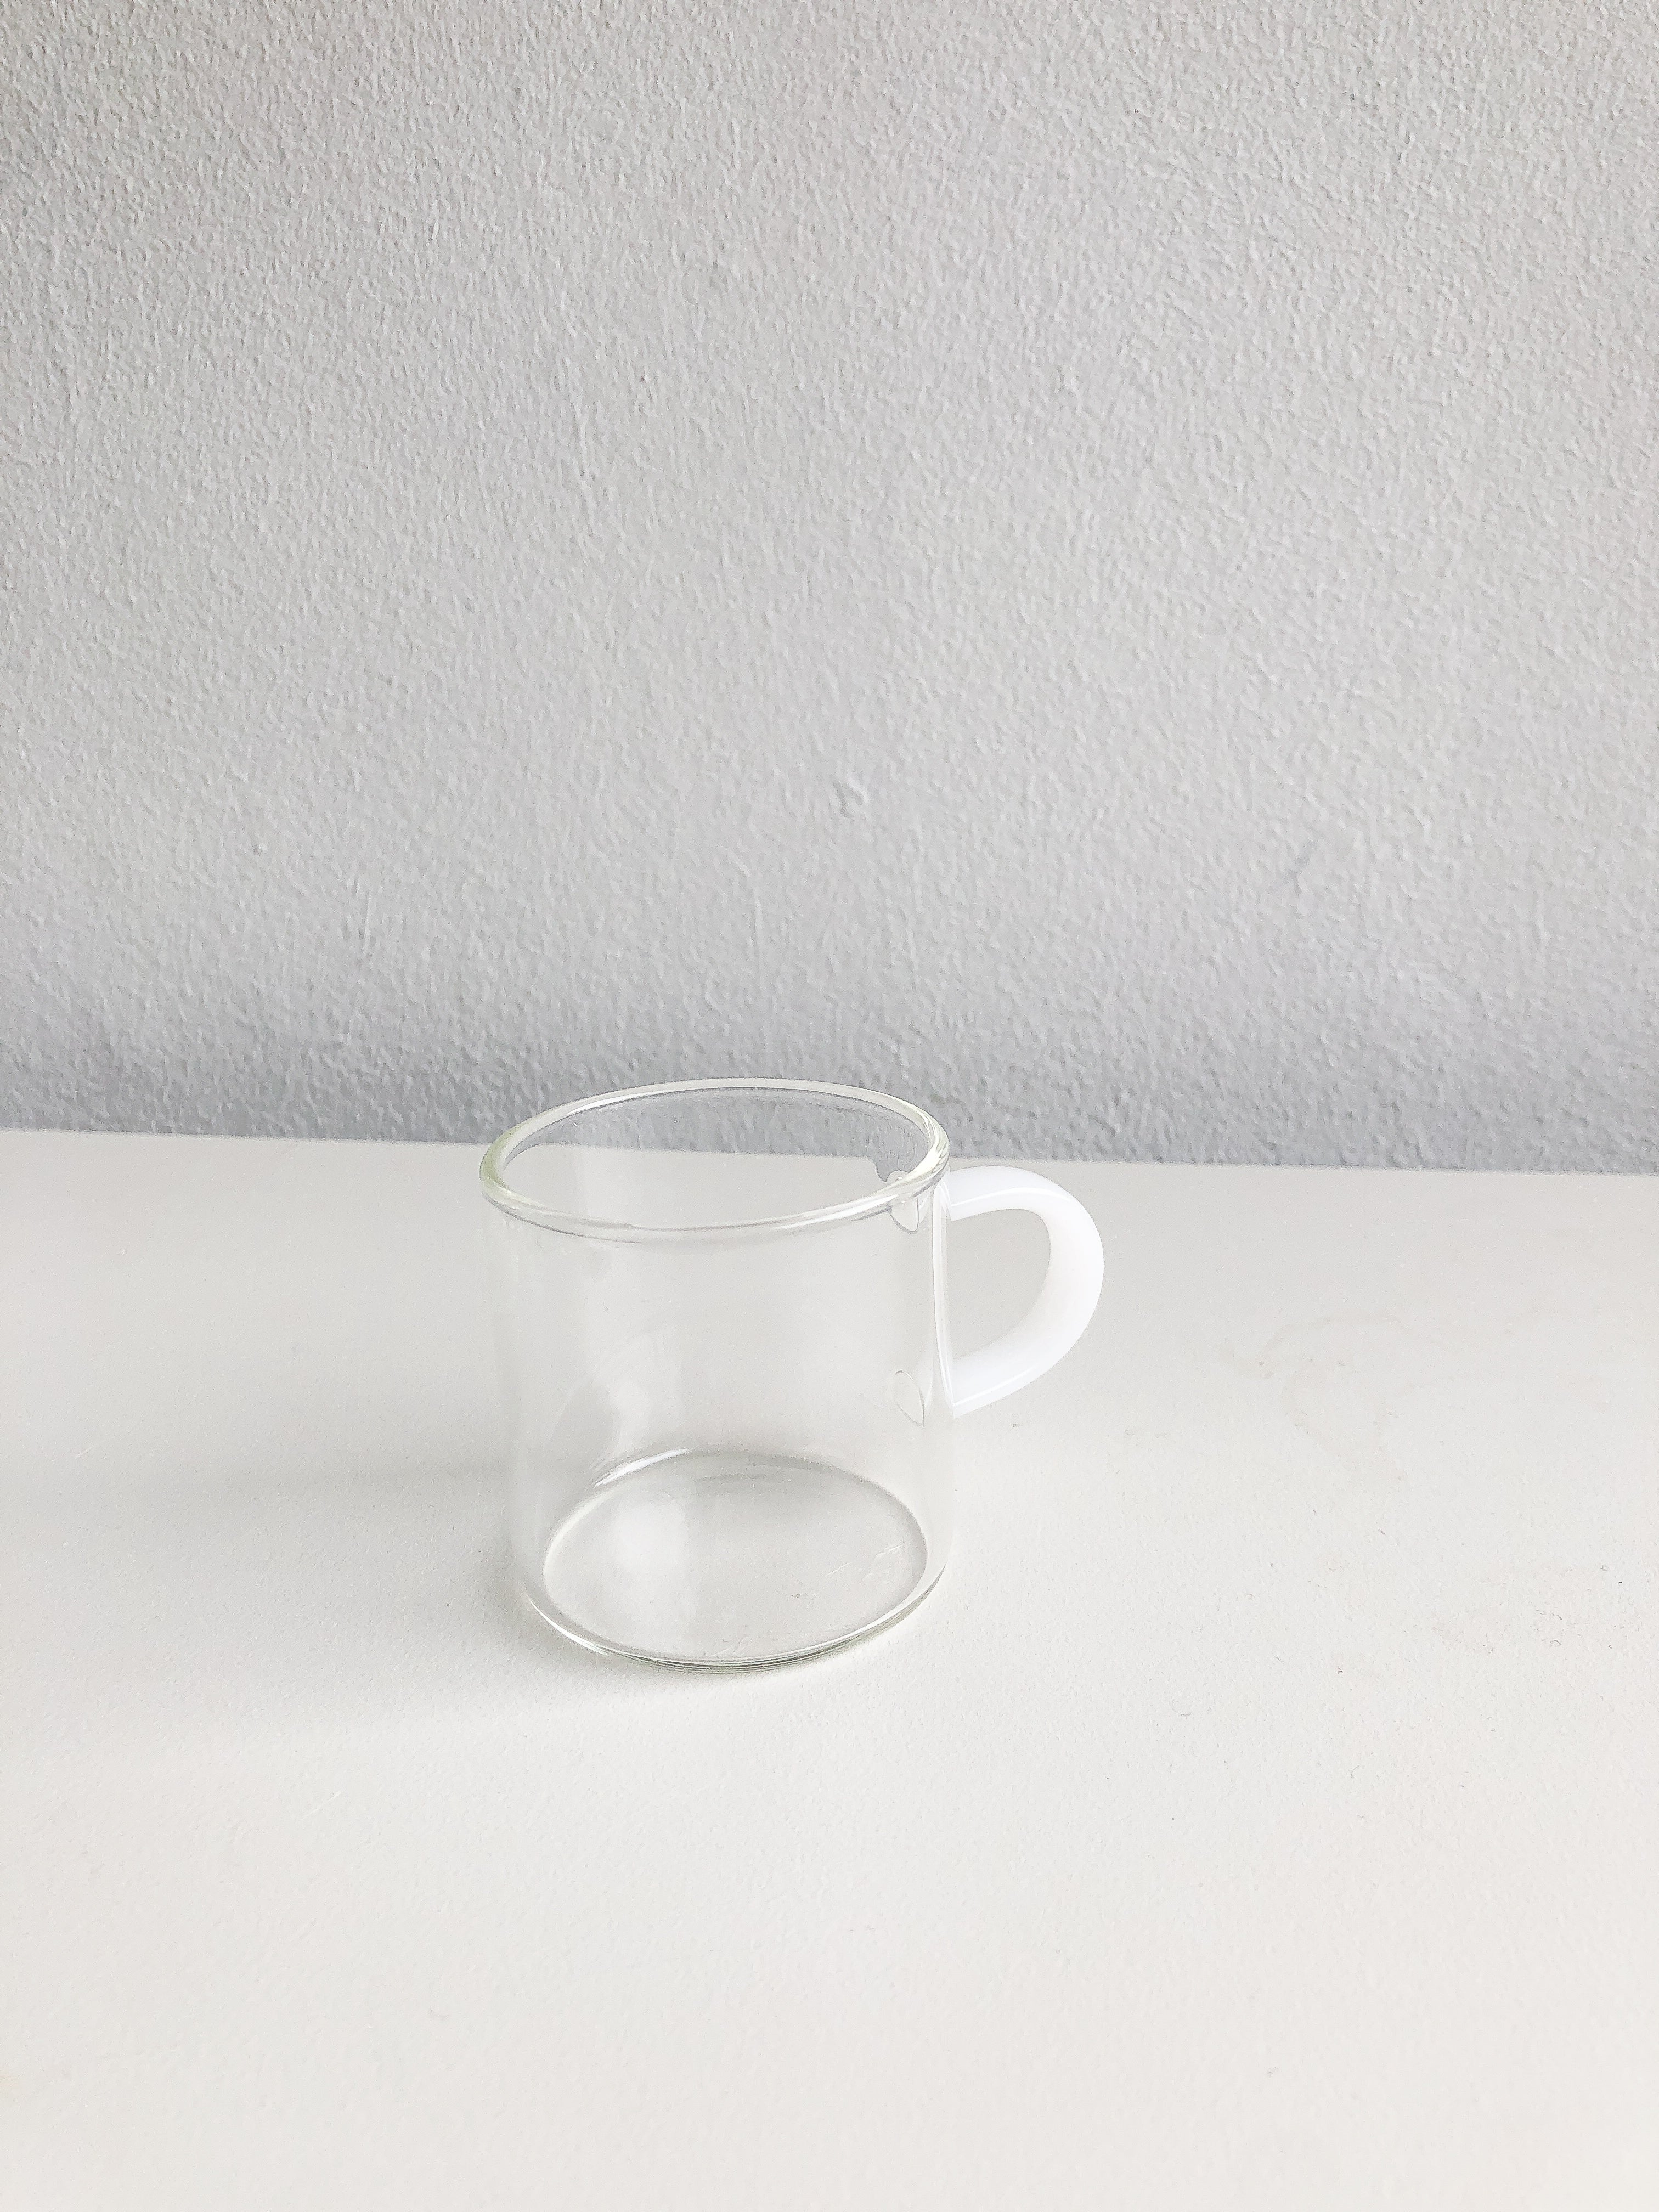 Accent Macchiato Glass in Milk by PROSE Tabletop